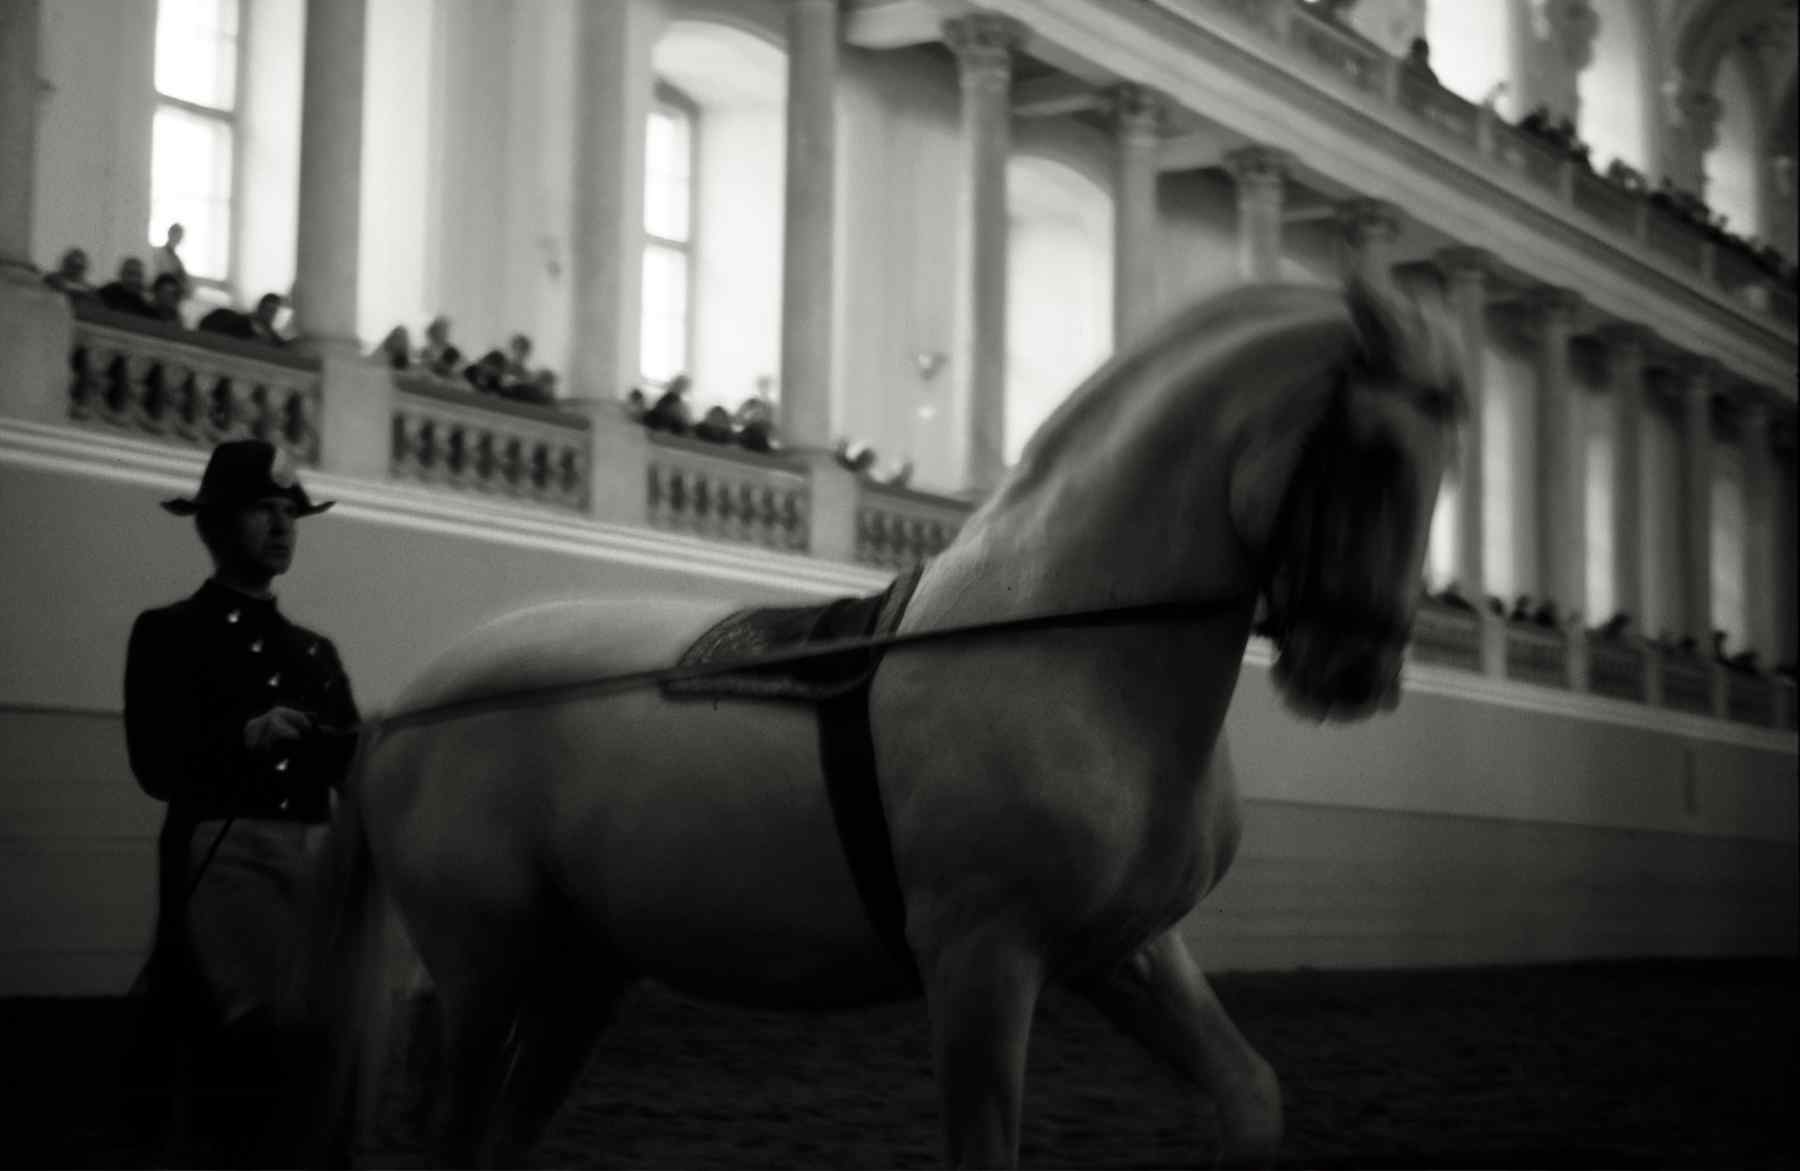 LIPIZZANER HORSE at the SPANISH RIDING SCHOOL in VIENNA